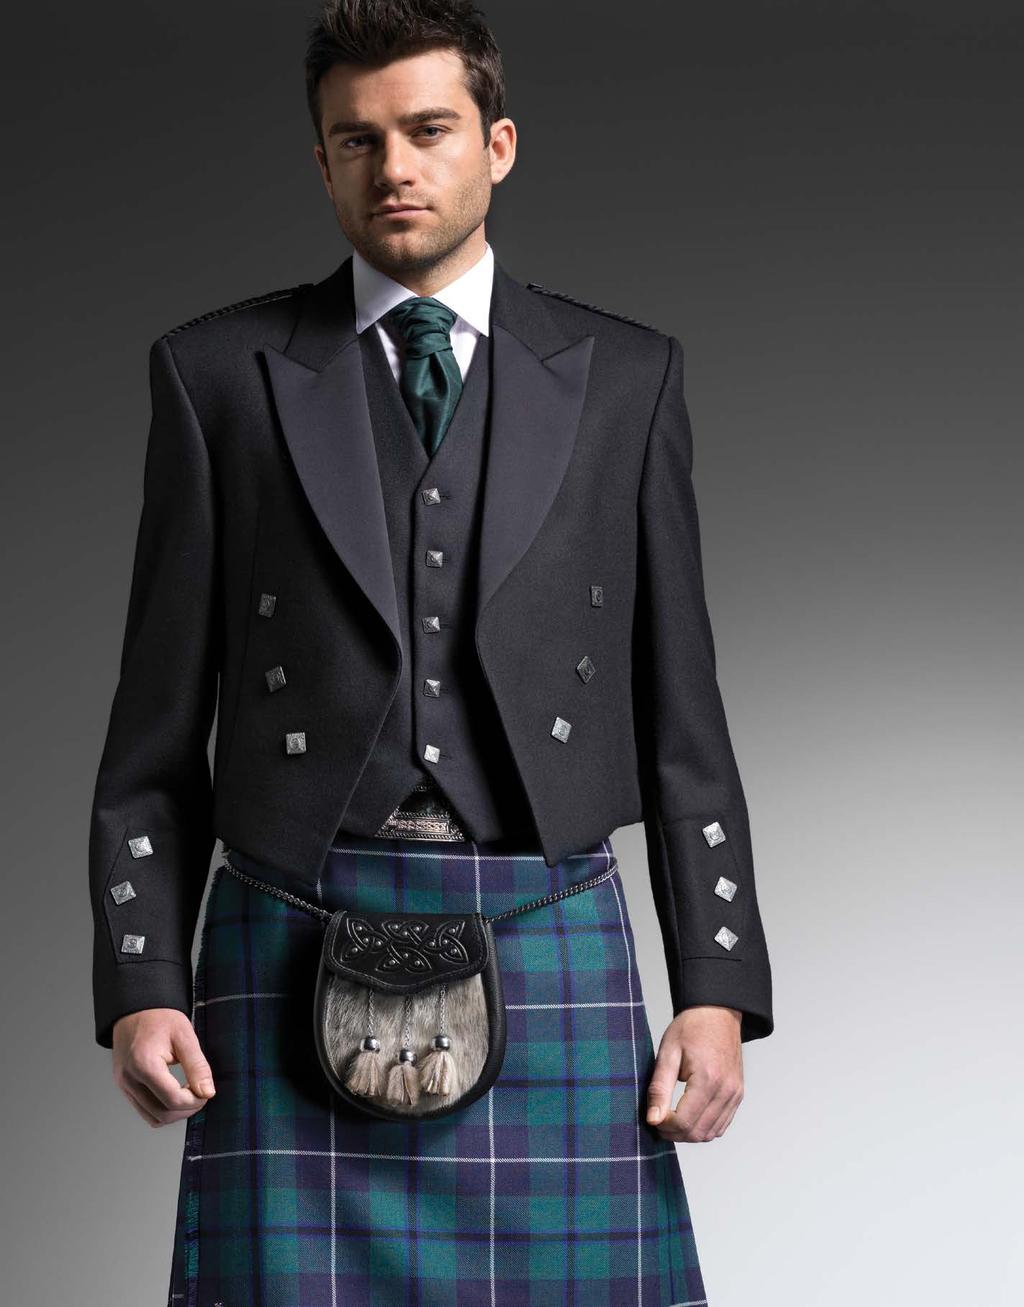 Flower of Scotland Kilt Worn with Black Prince Charlie Jacket, 3-Button Waistcoat, Black Satin Bow Tie, Victorian Collar Shirt and Dress Sporran Prince Charlie Collection